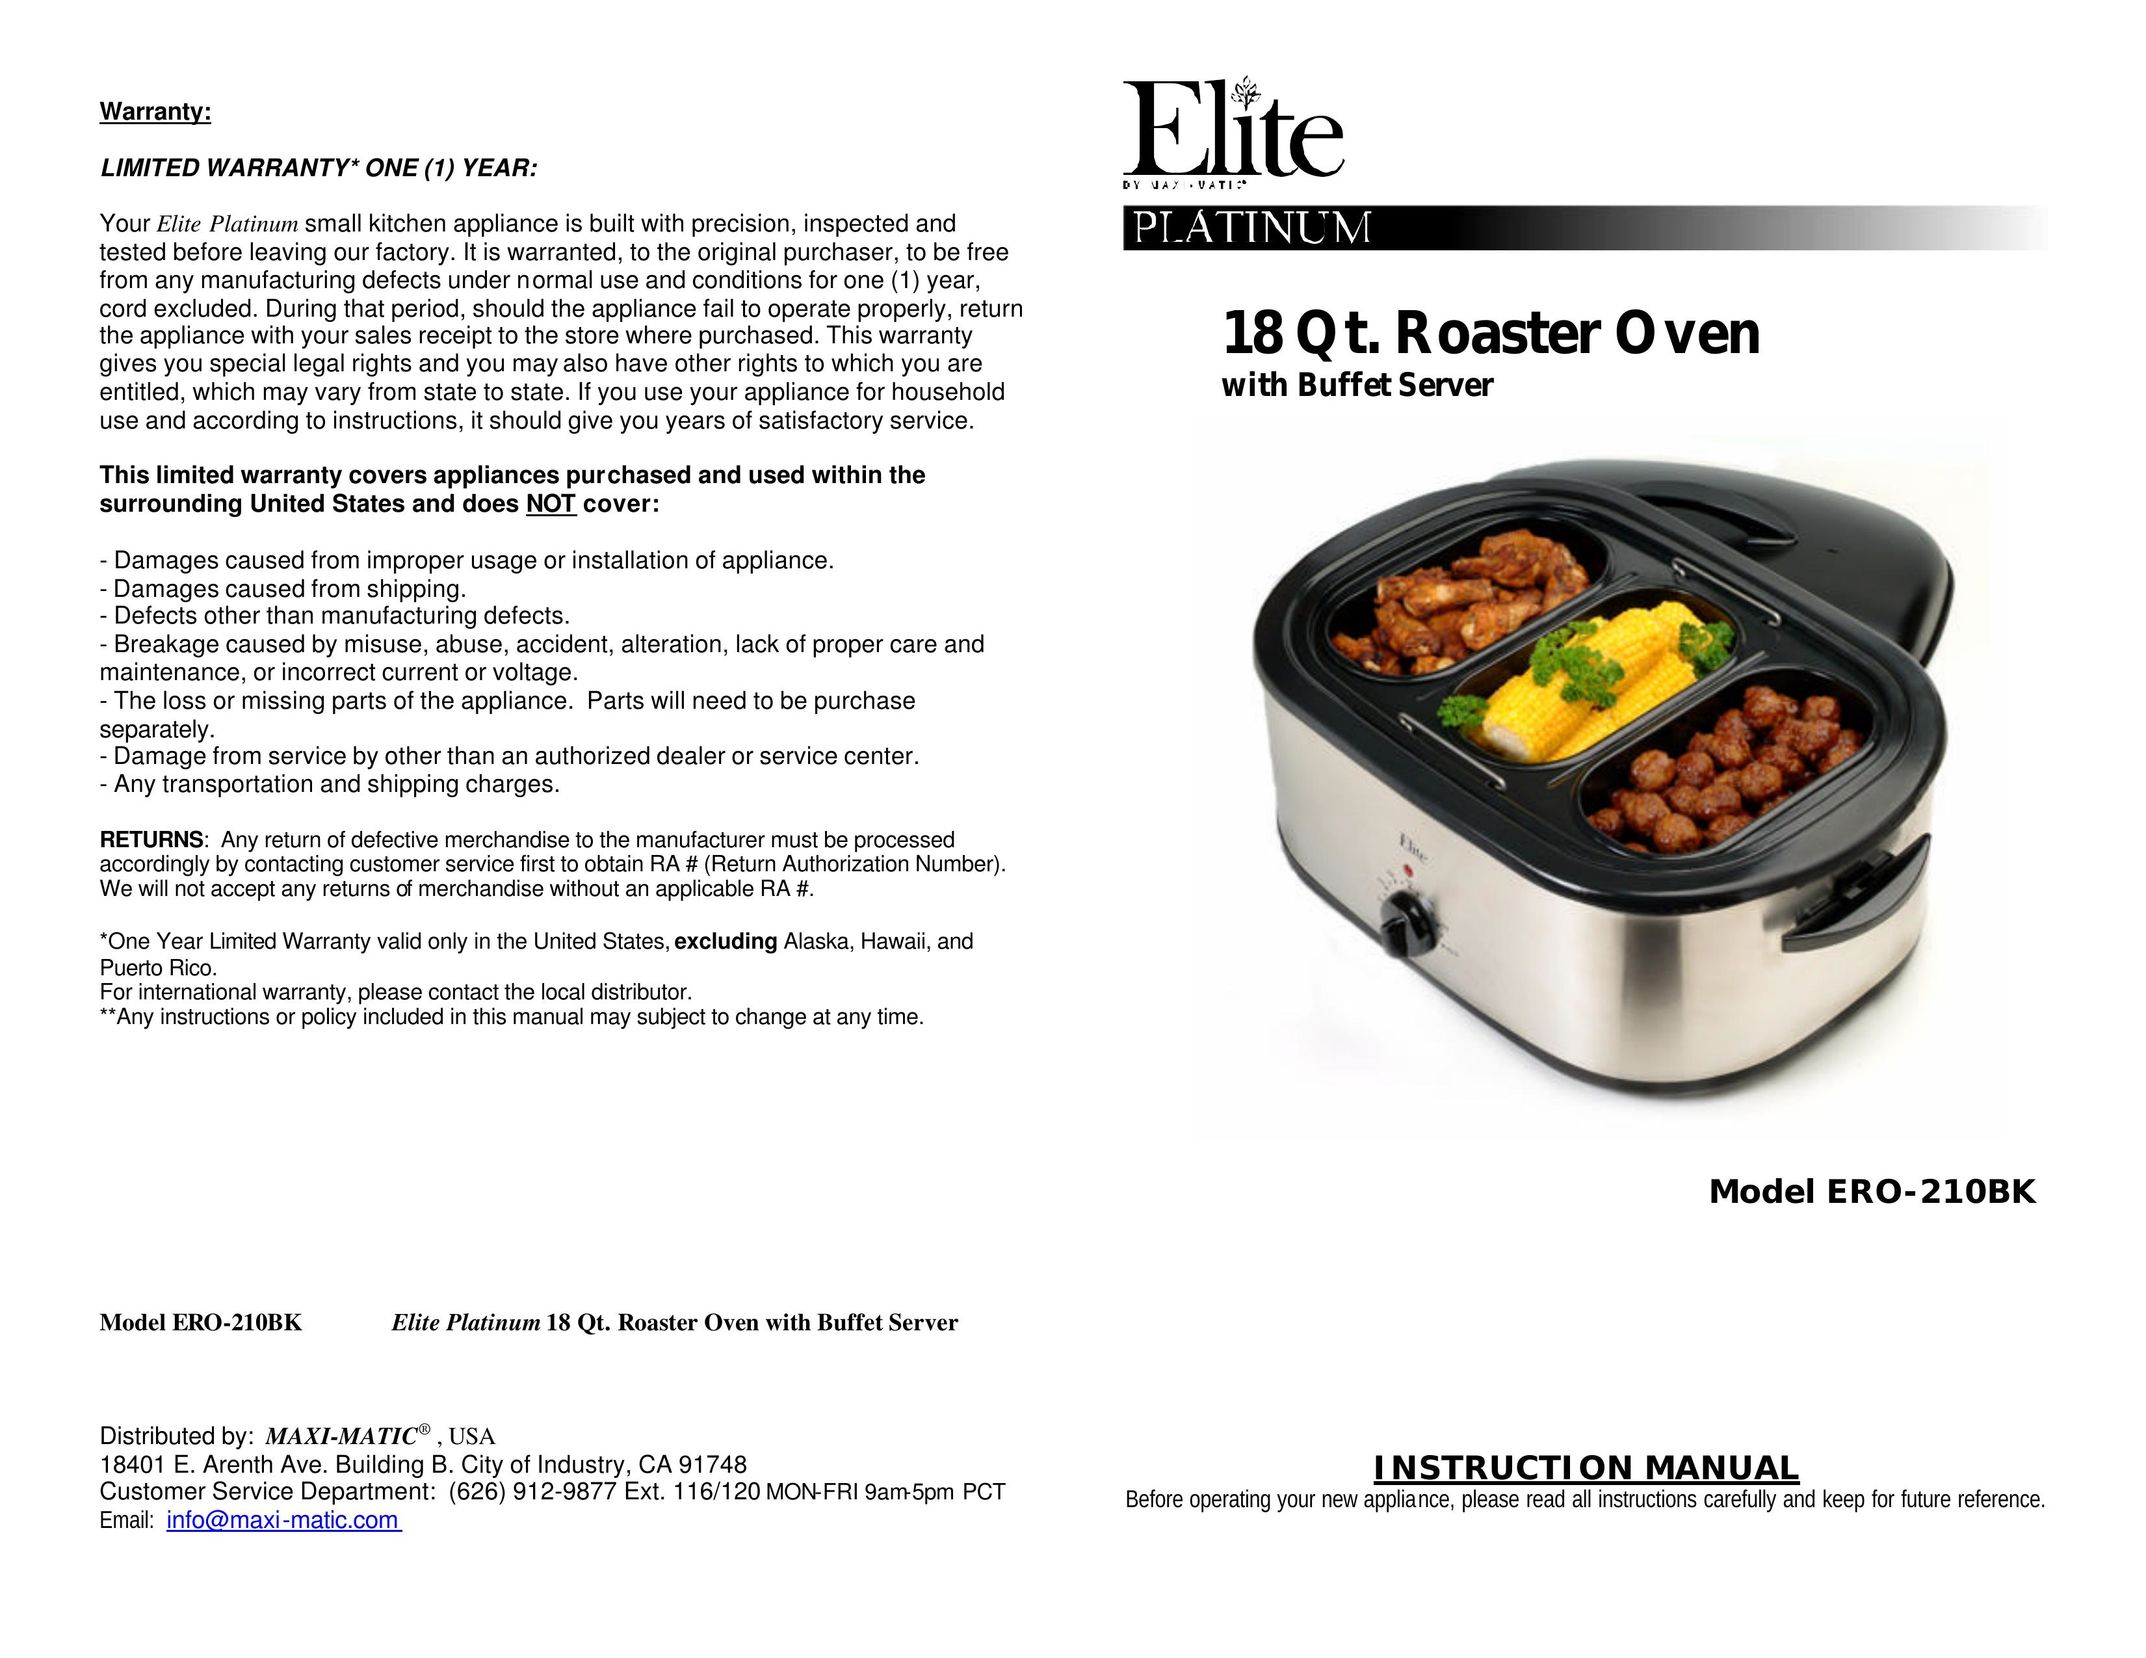 Elite ERO-210BK Oven User Manual